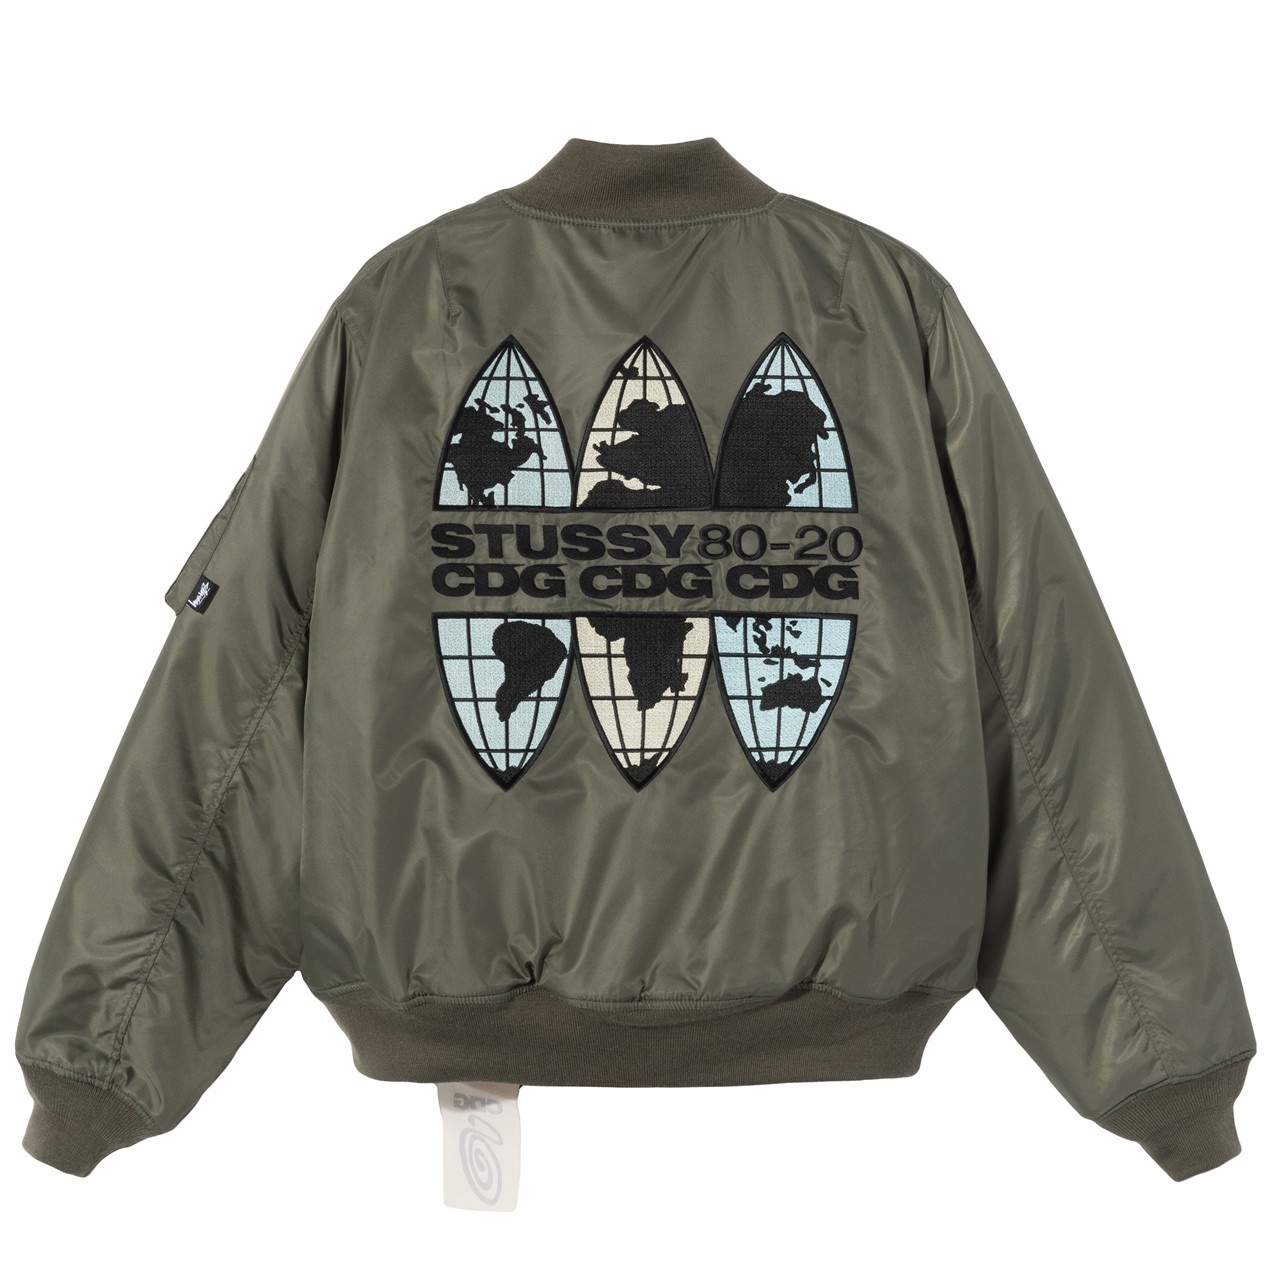 Stussy x CDG bomber jacket